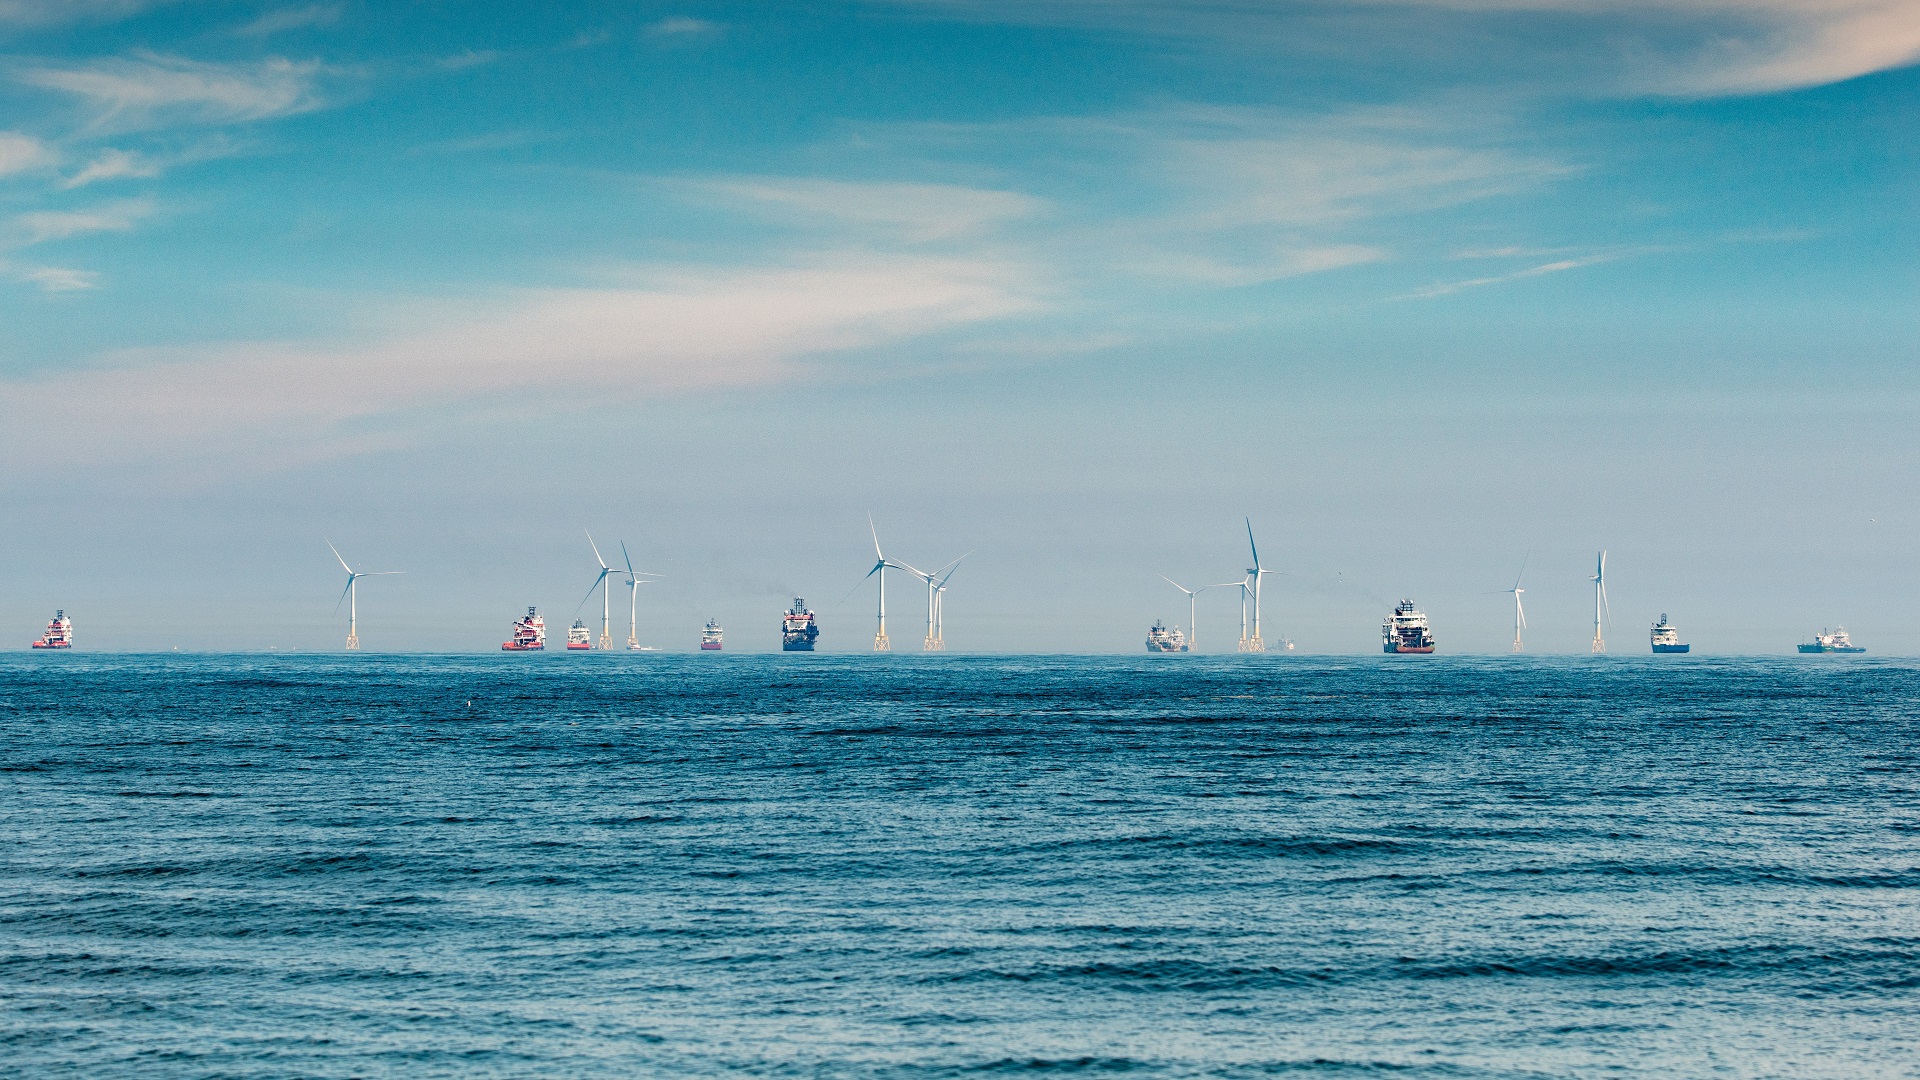 The European Offshore Wind Deployment Centre